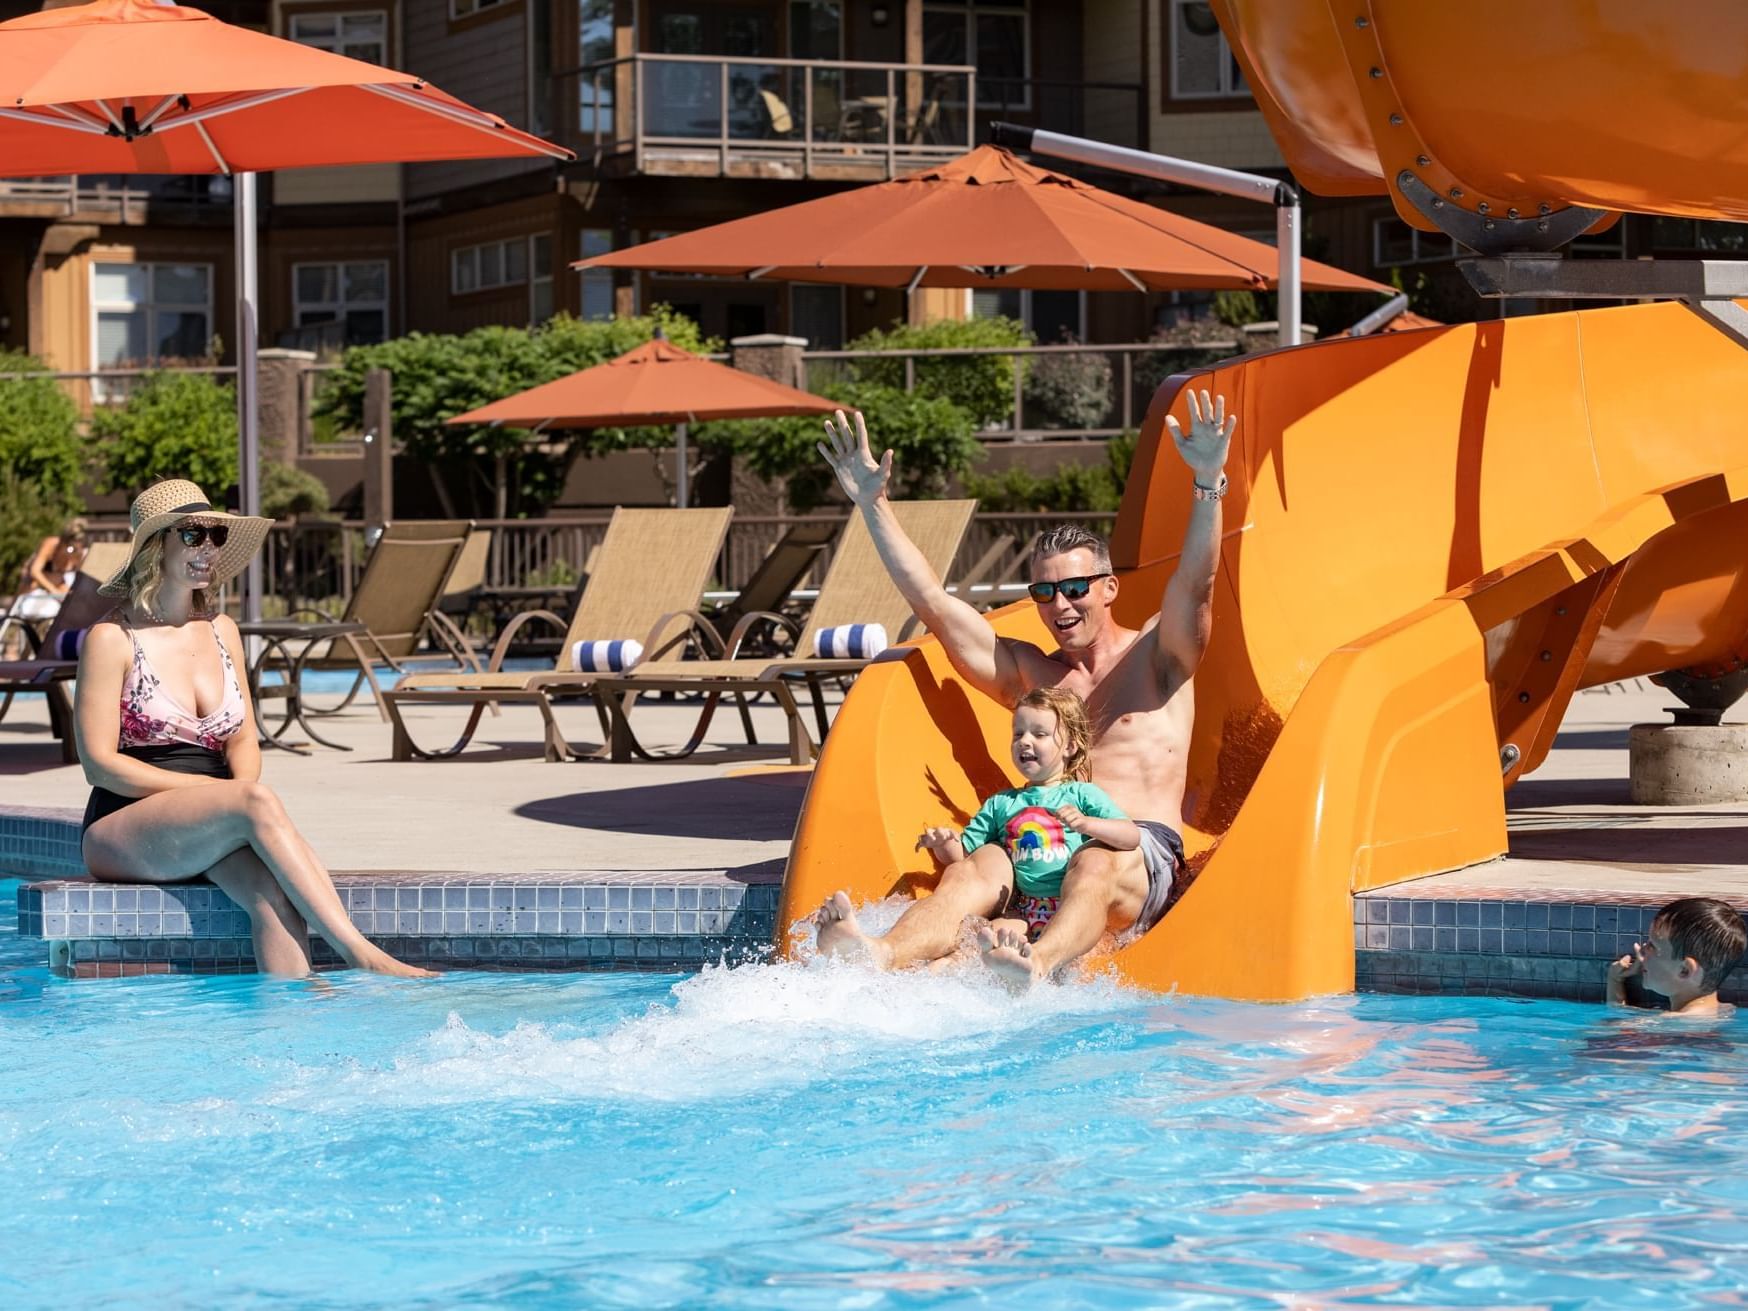 The Cove Lakeside Resort Kelowna Okanagan Lake Hotel